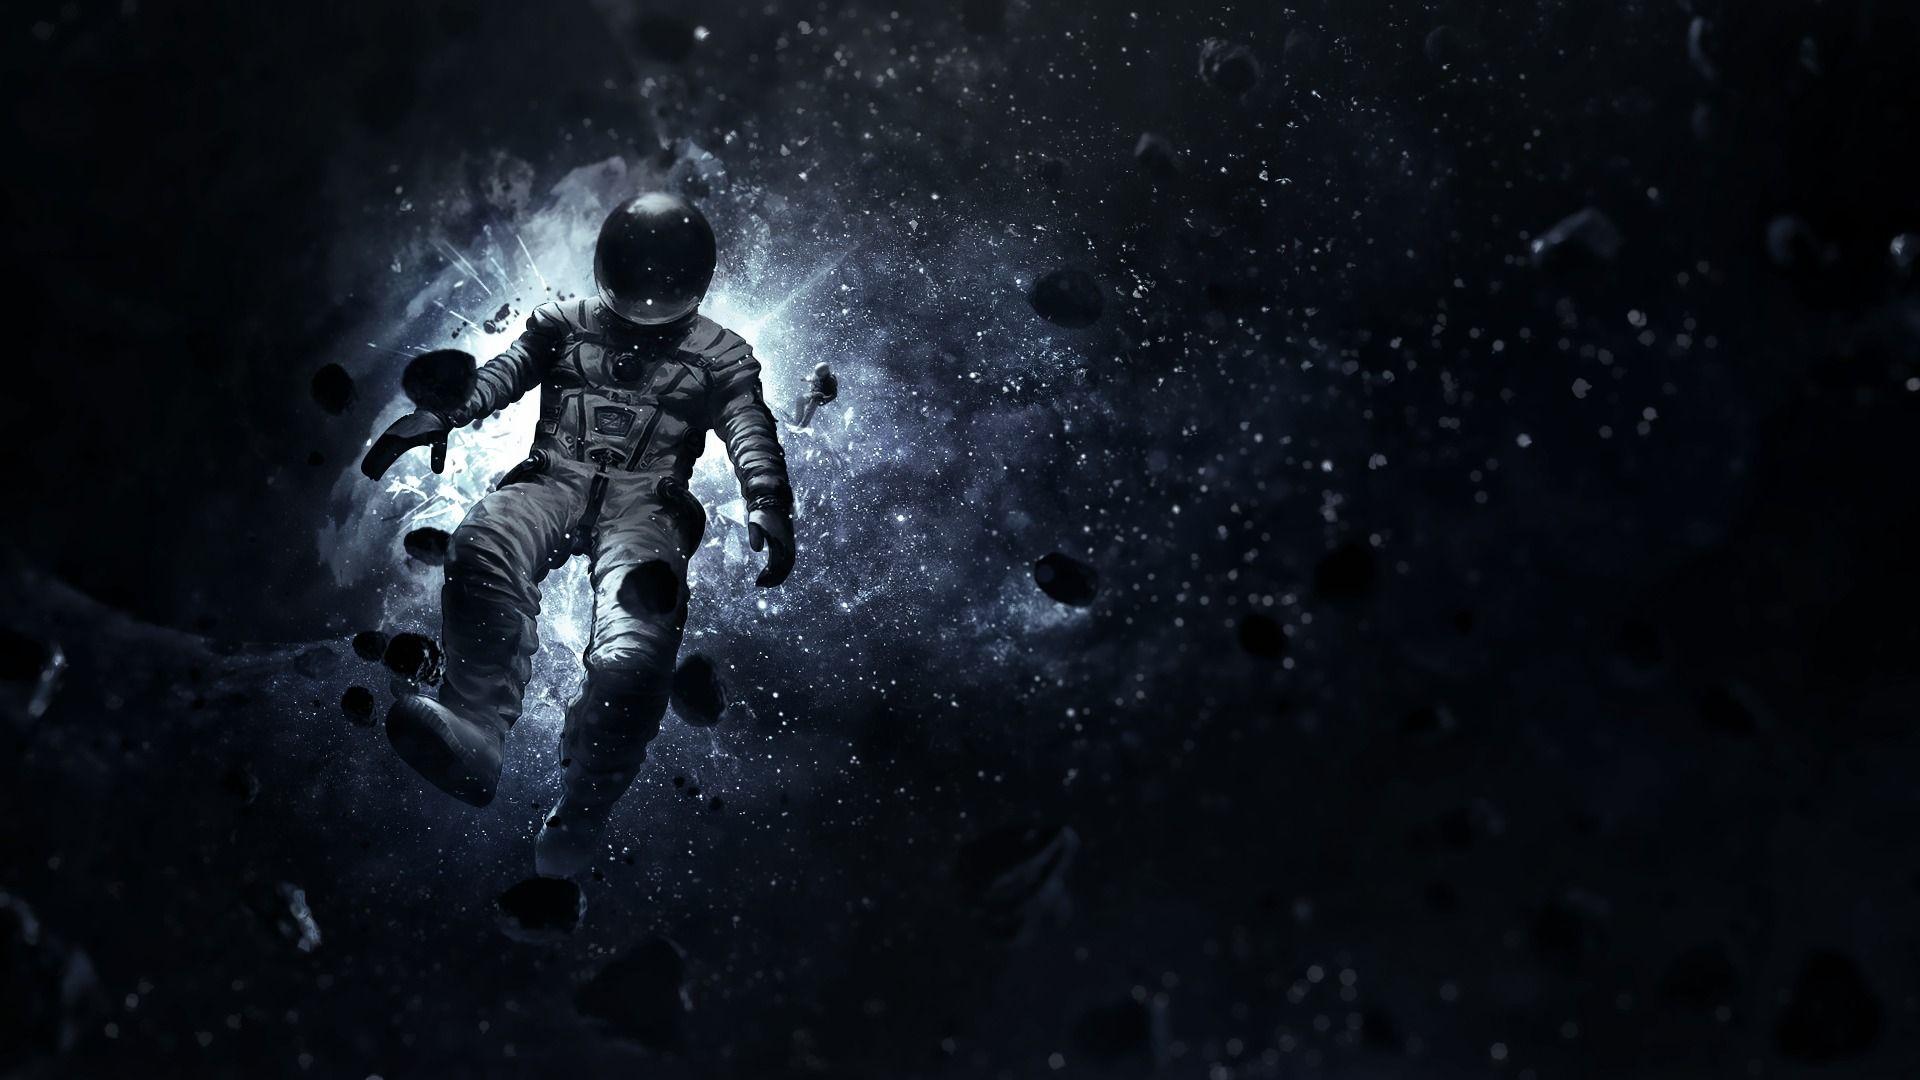 Sci Fi Astronaut Wallpaper. Astronauts. Astronaut